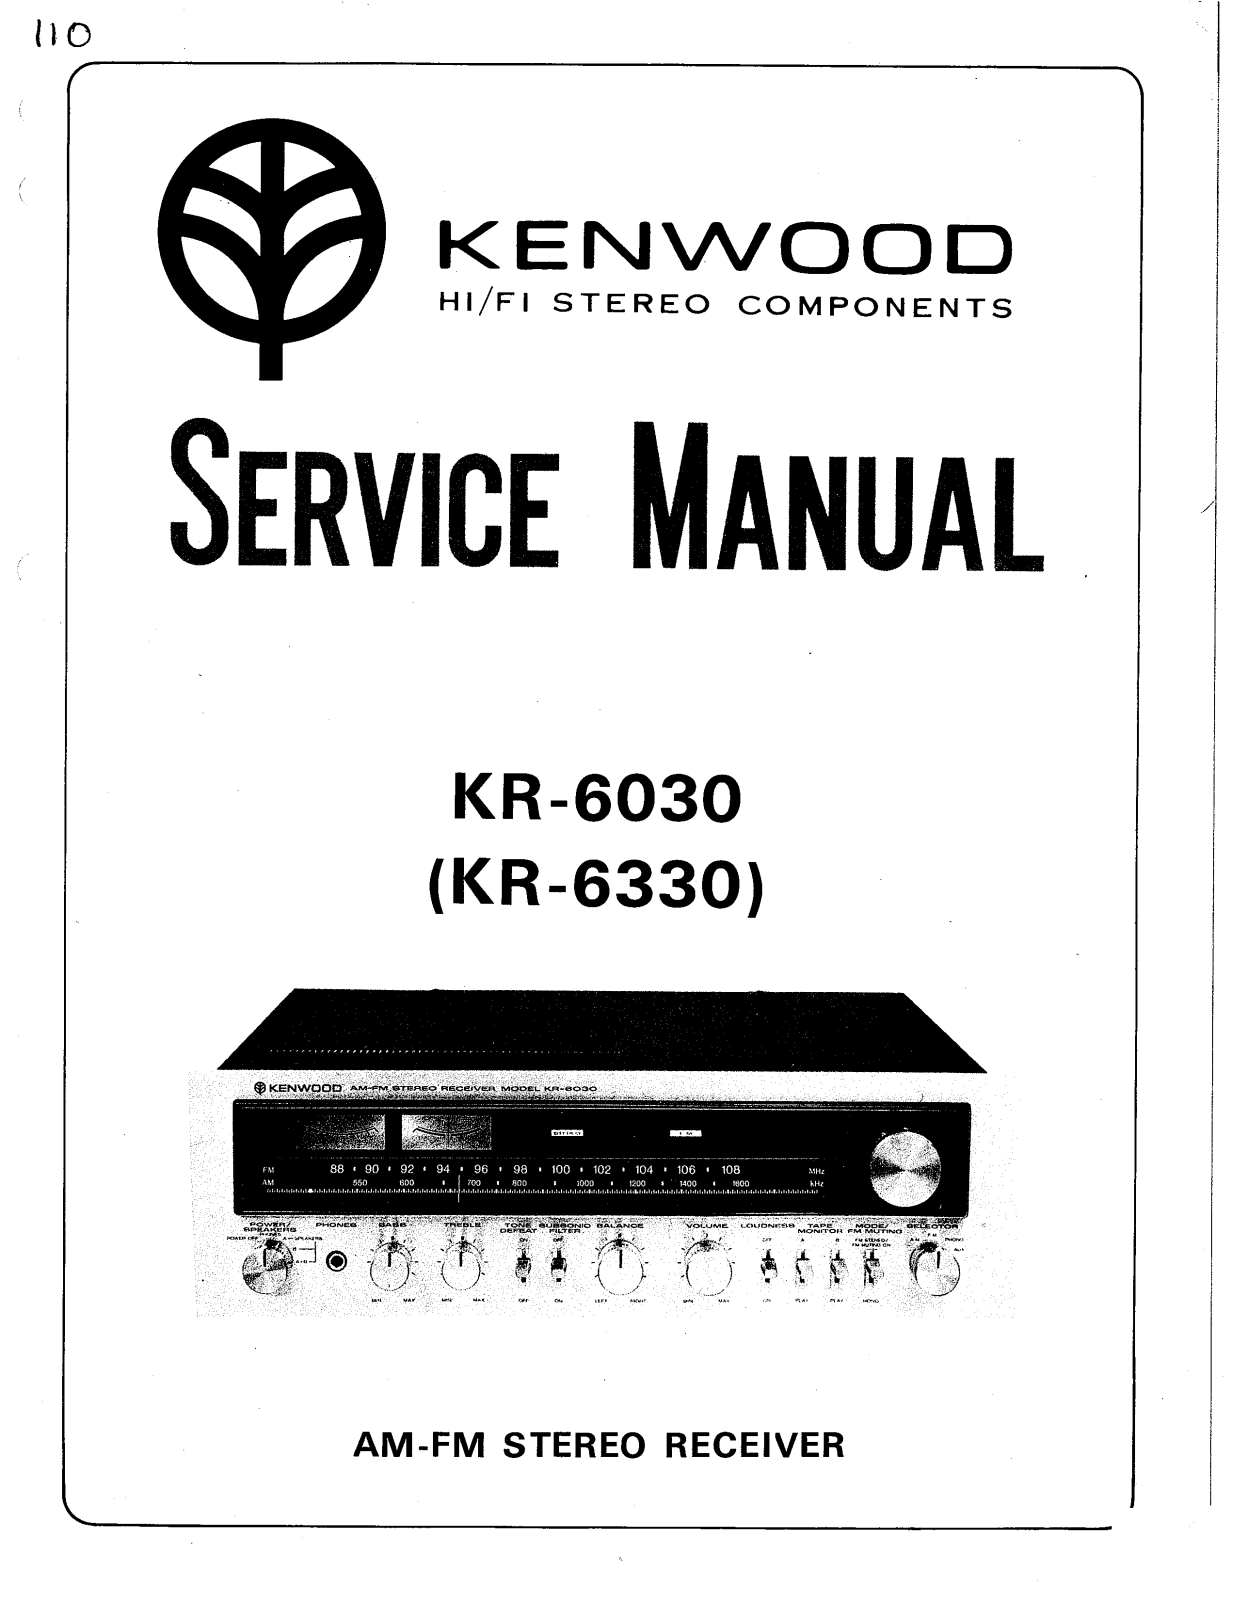 Kenwood KR-6030, KR-6330 Service Manual